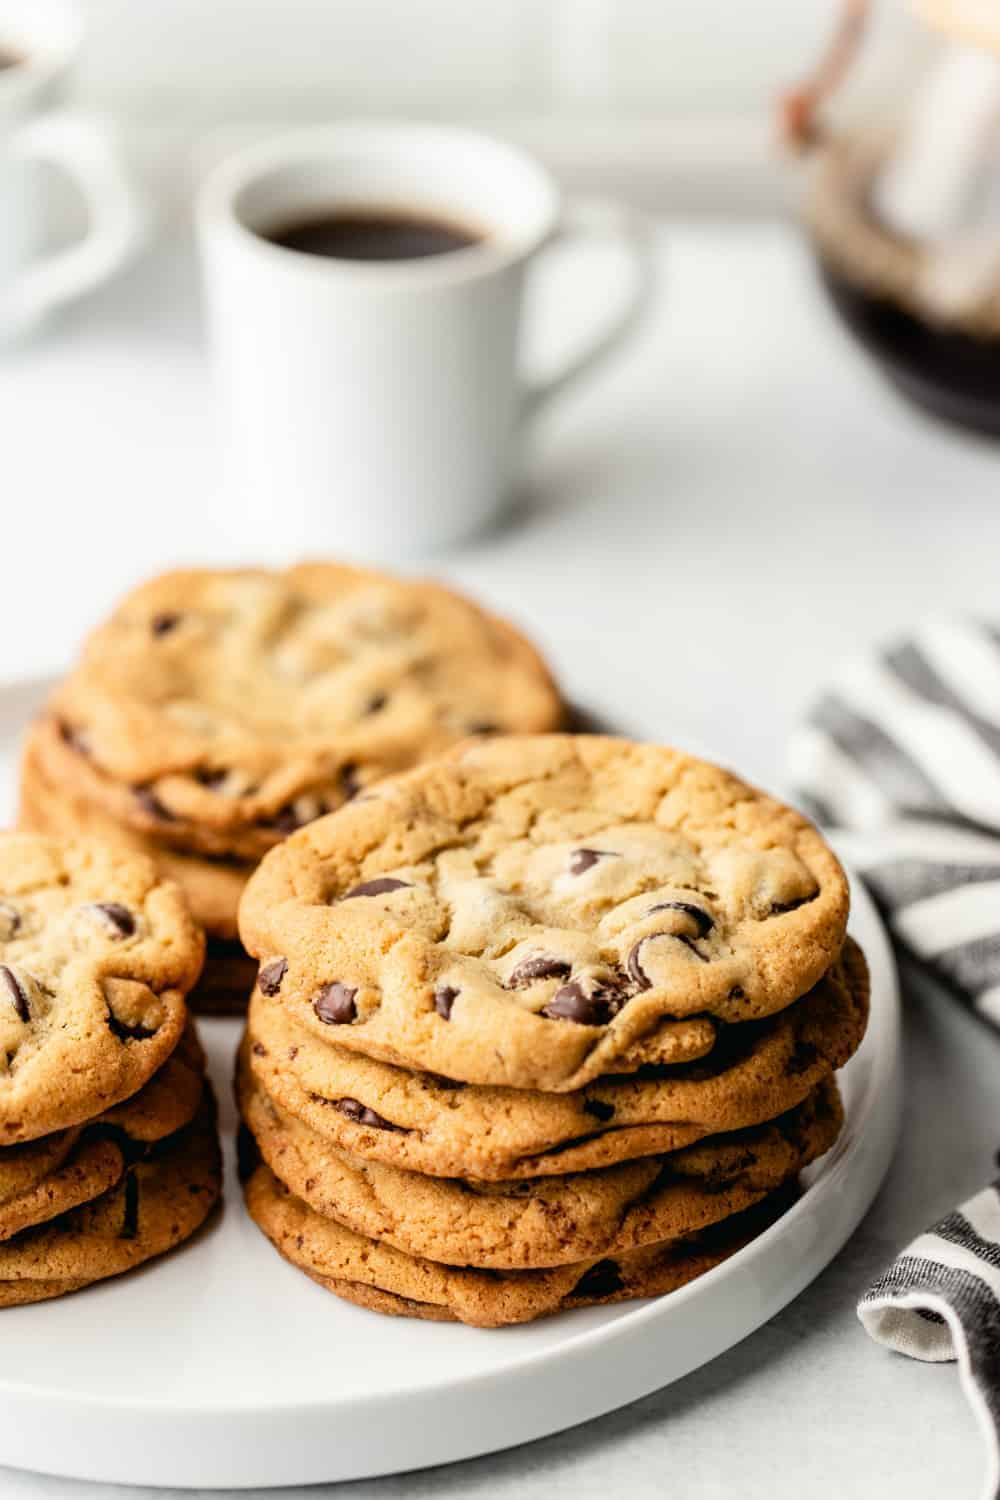 https://www.mybakingaddiction.com/wp-content/uploads/2011/05/Baked-Chocolate-Chip-Cookies-8-of-16_resized.jpg